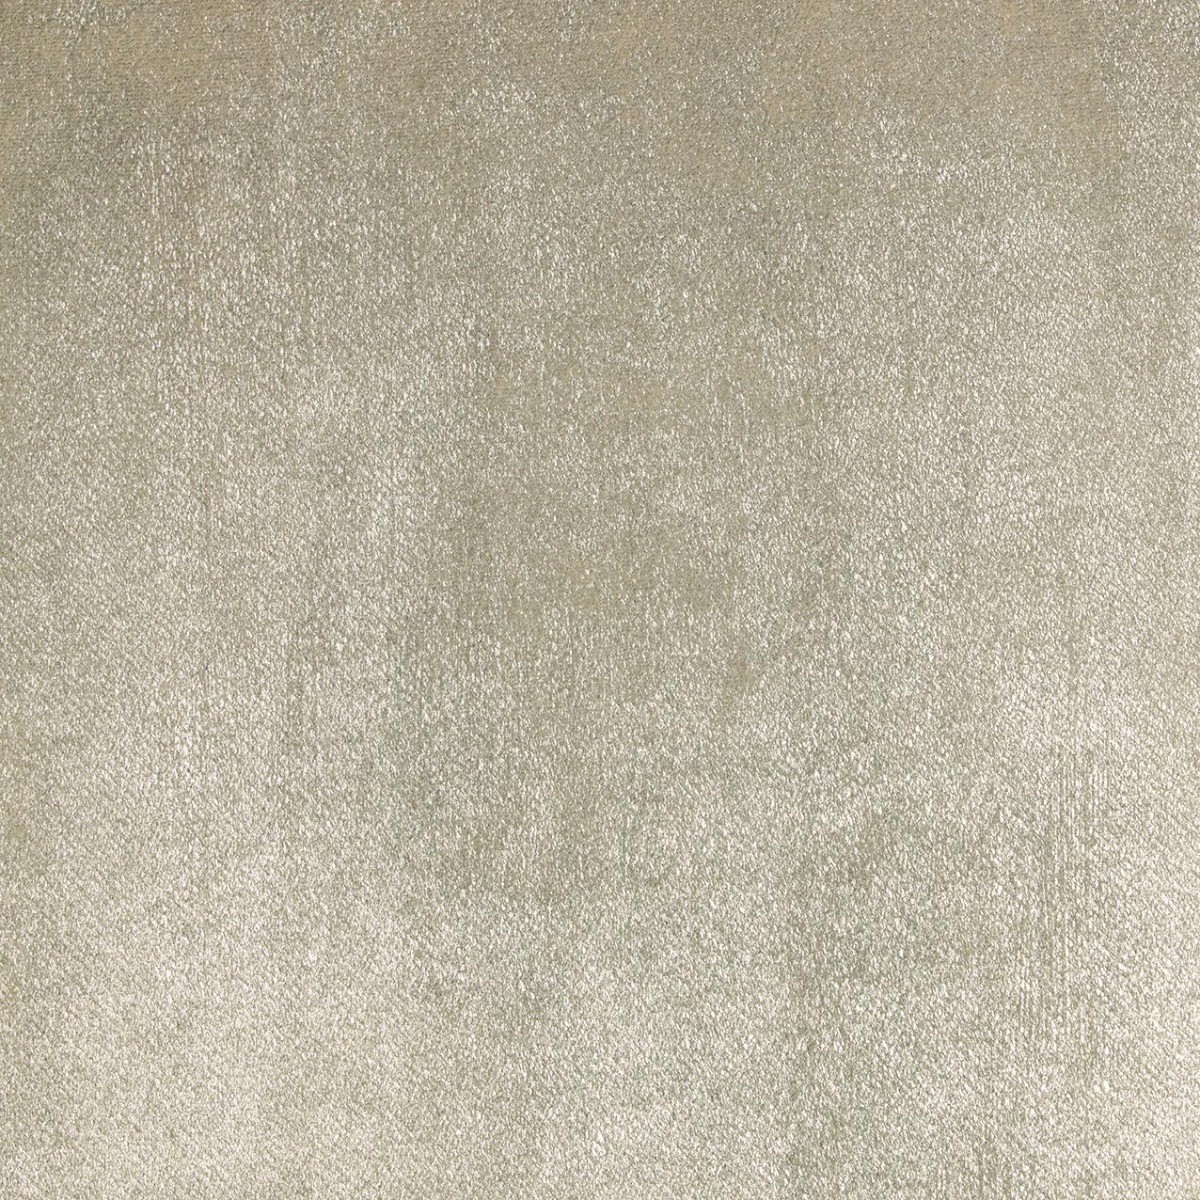  Портьерная ткань METALLIC WHITE, ширина 140 см  - Фото